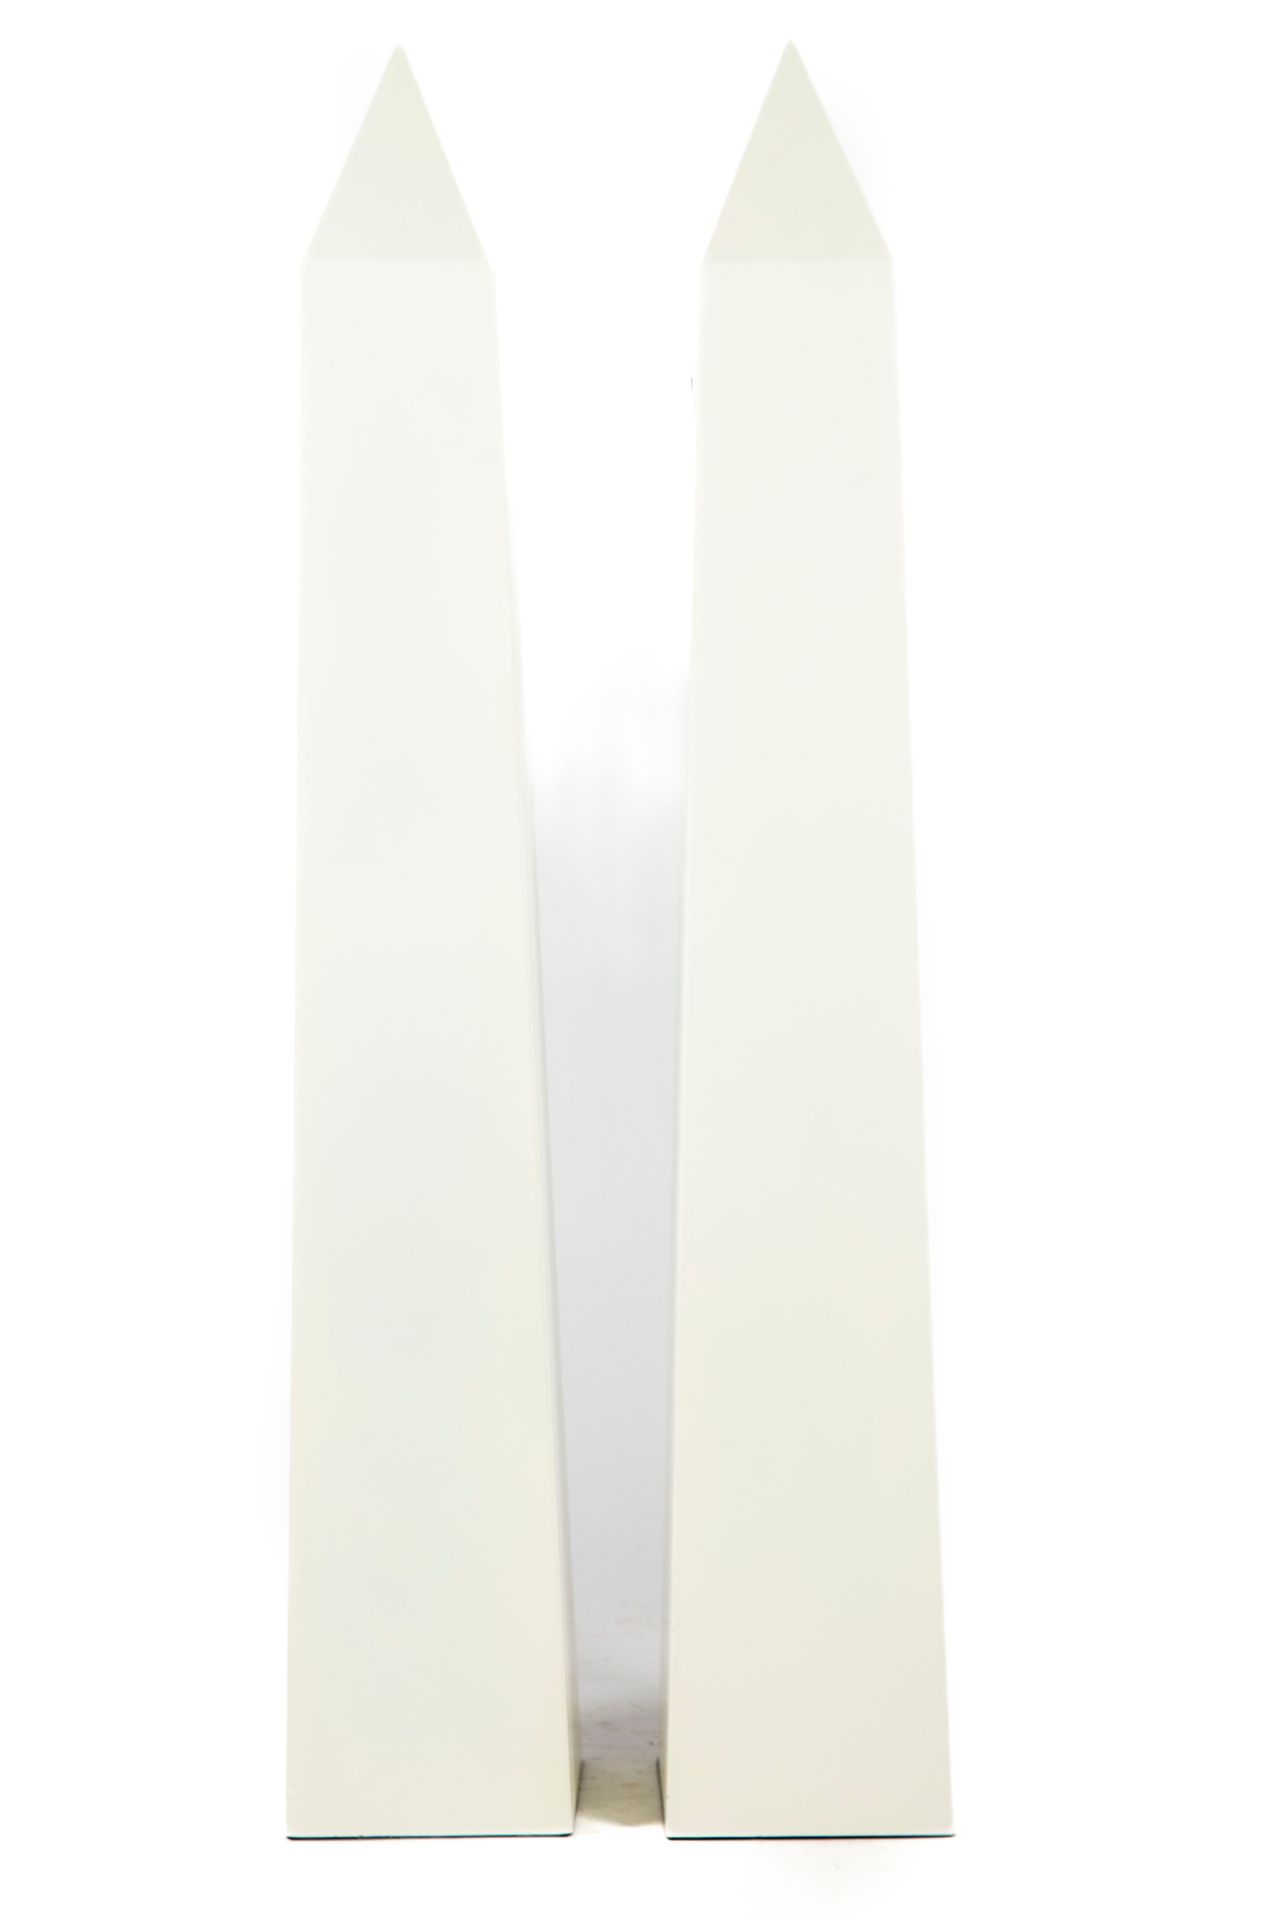 Null Großes Paar Obelisken aus weißem Kunstharz.
H. : 95 cm